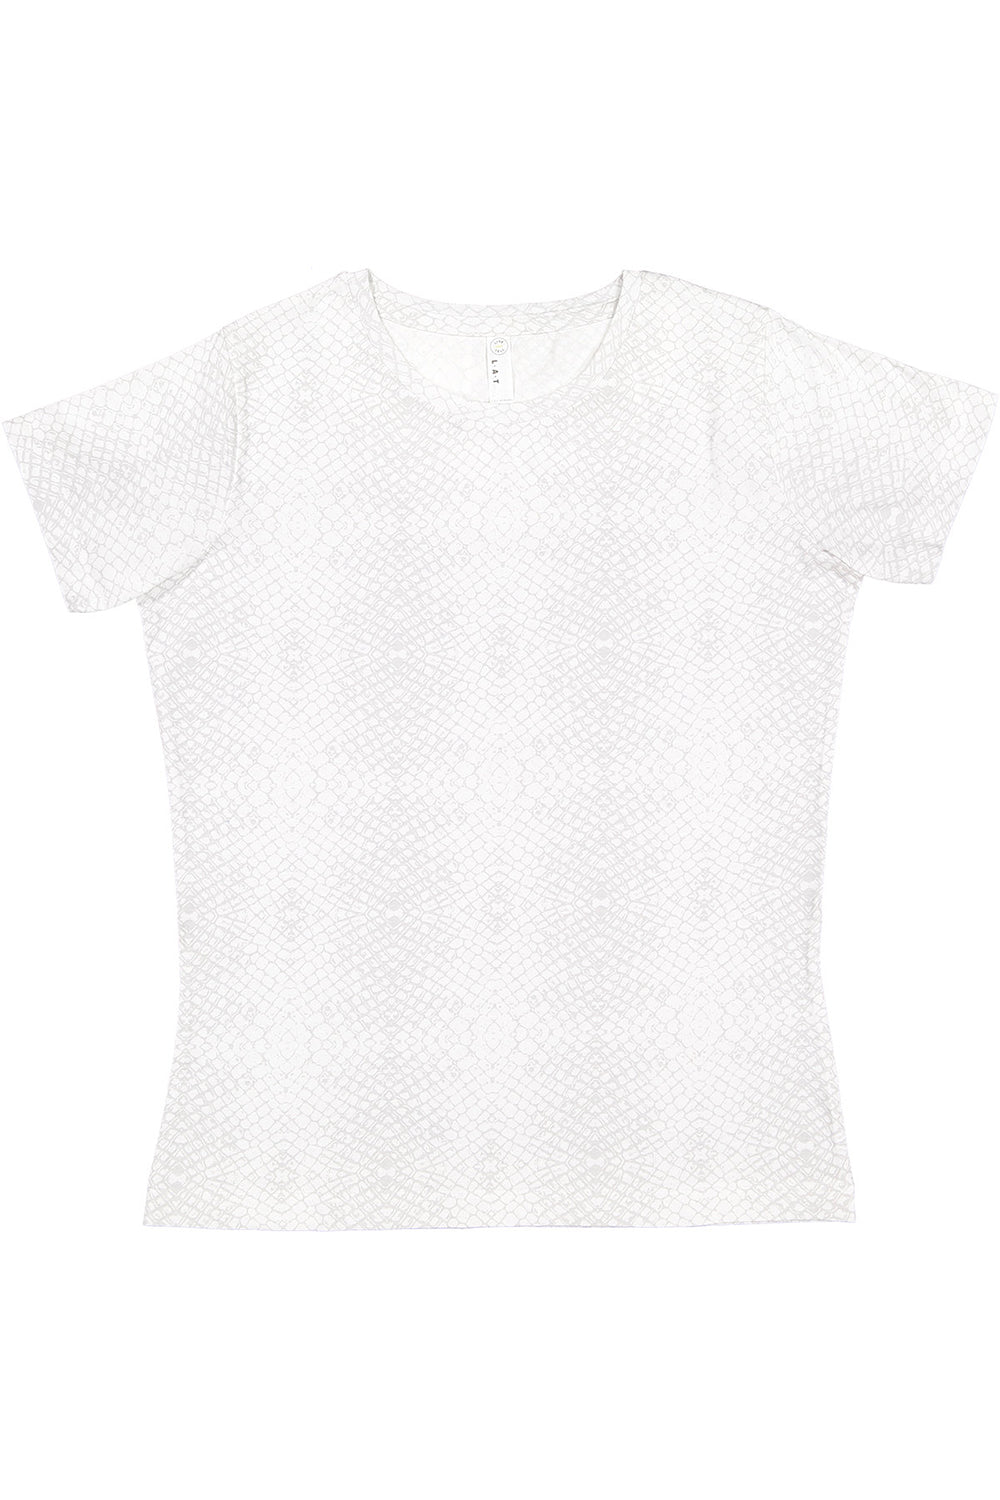 LAT 3516 Womens Fine Jersey Short Sleeve Crewneck T-Shirt White Reptile Flat Front